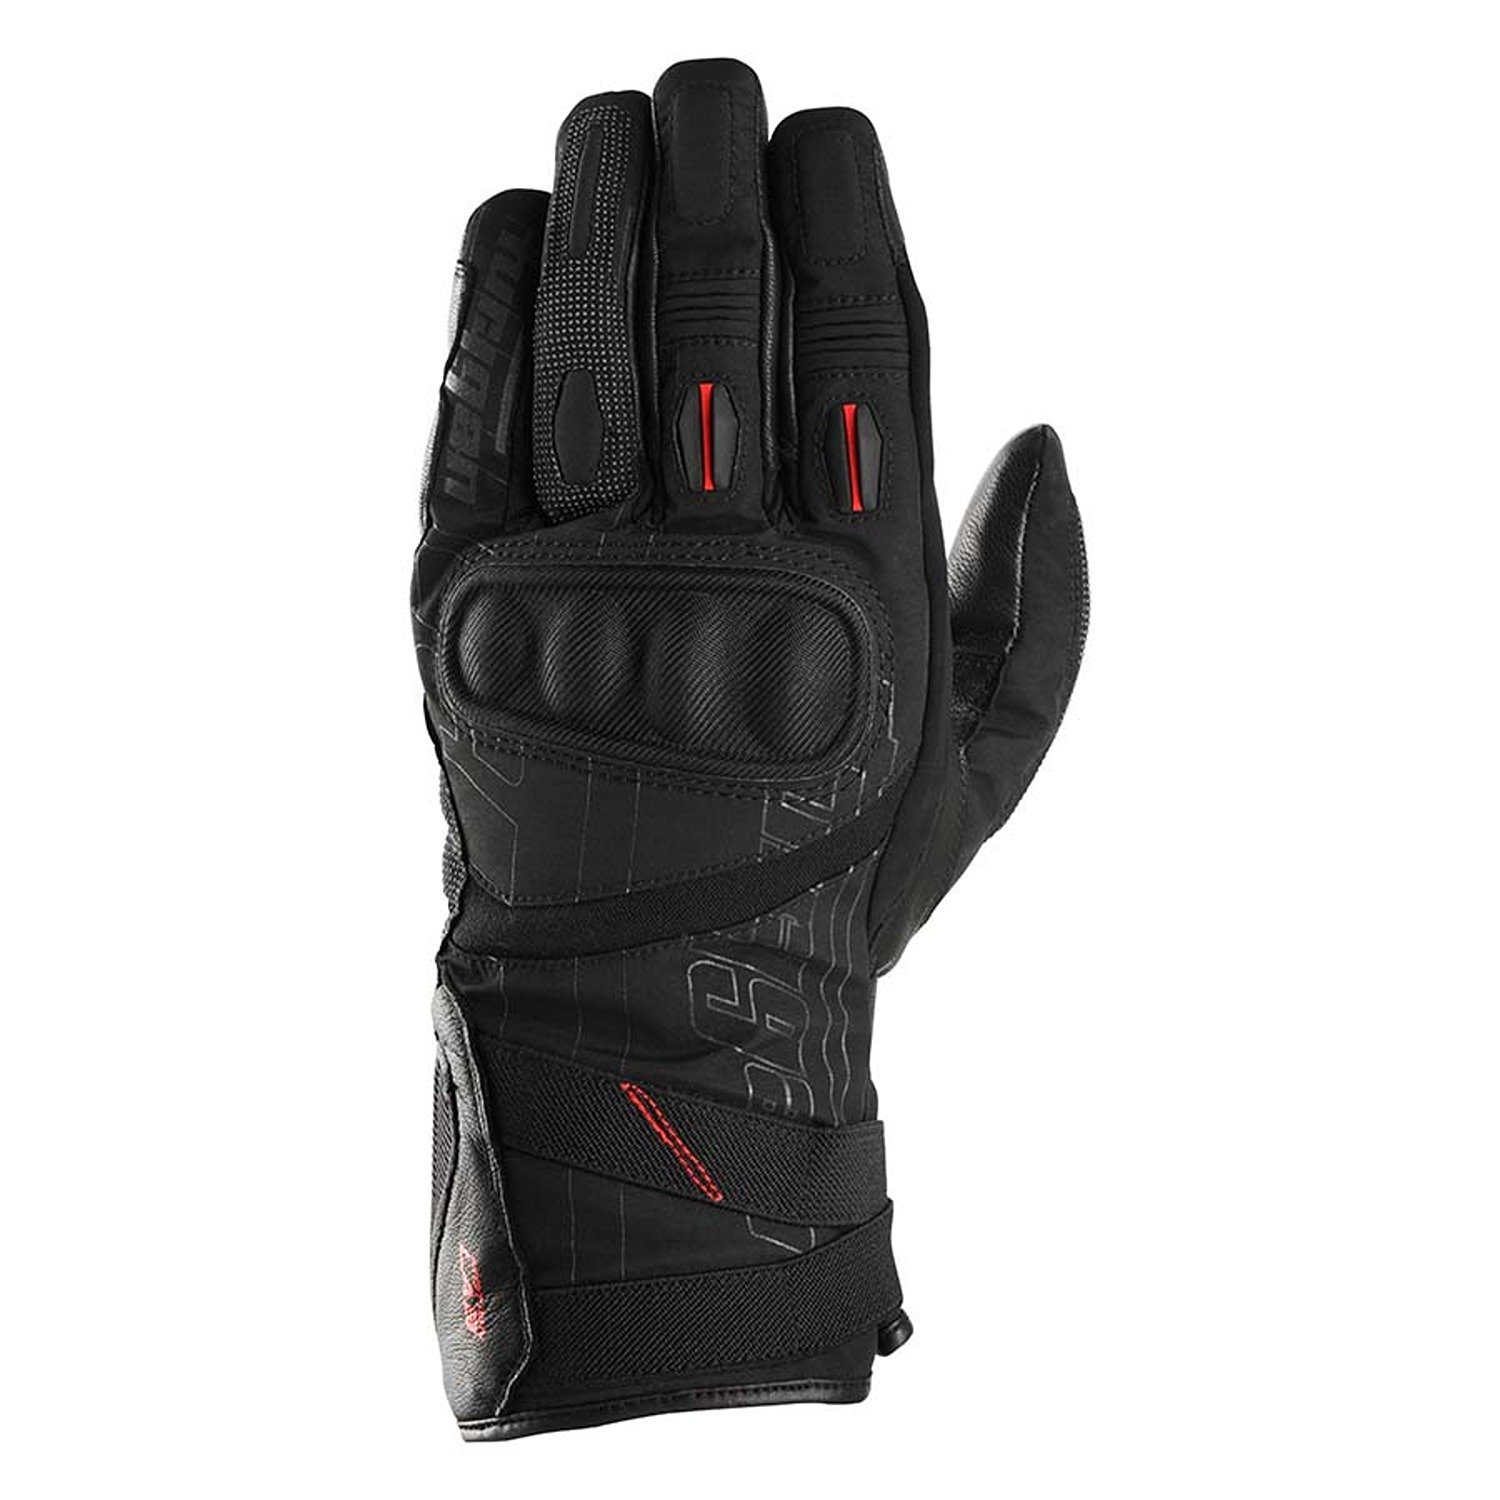 Image of Furygan Nomad Gloves Black Size 2XL ID 3435980373368